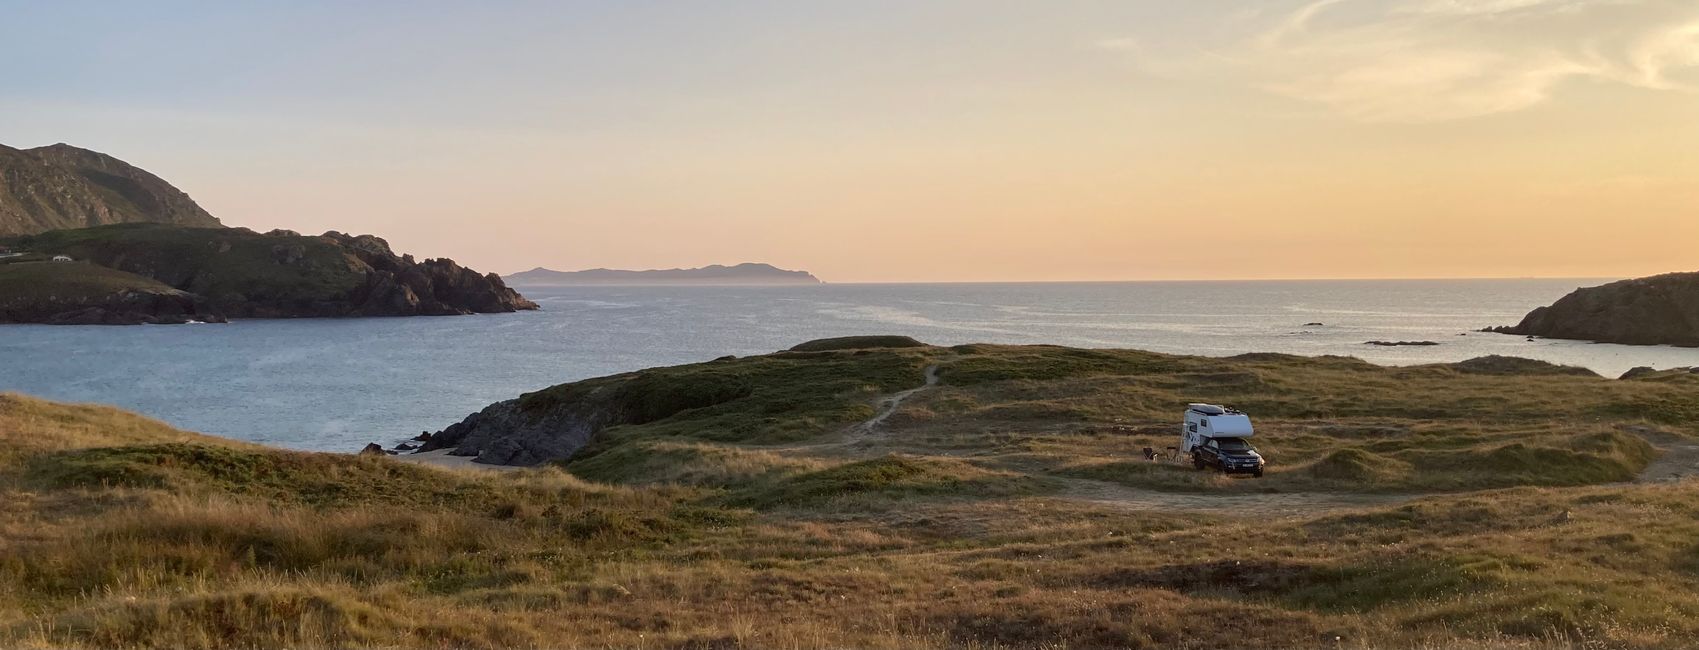 Galicia, Costa Verde a ak lakay atravè Dune du Pilat la